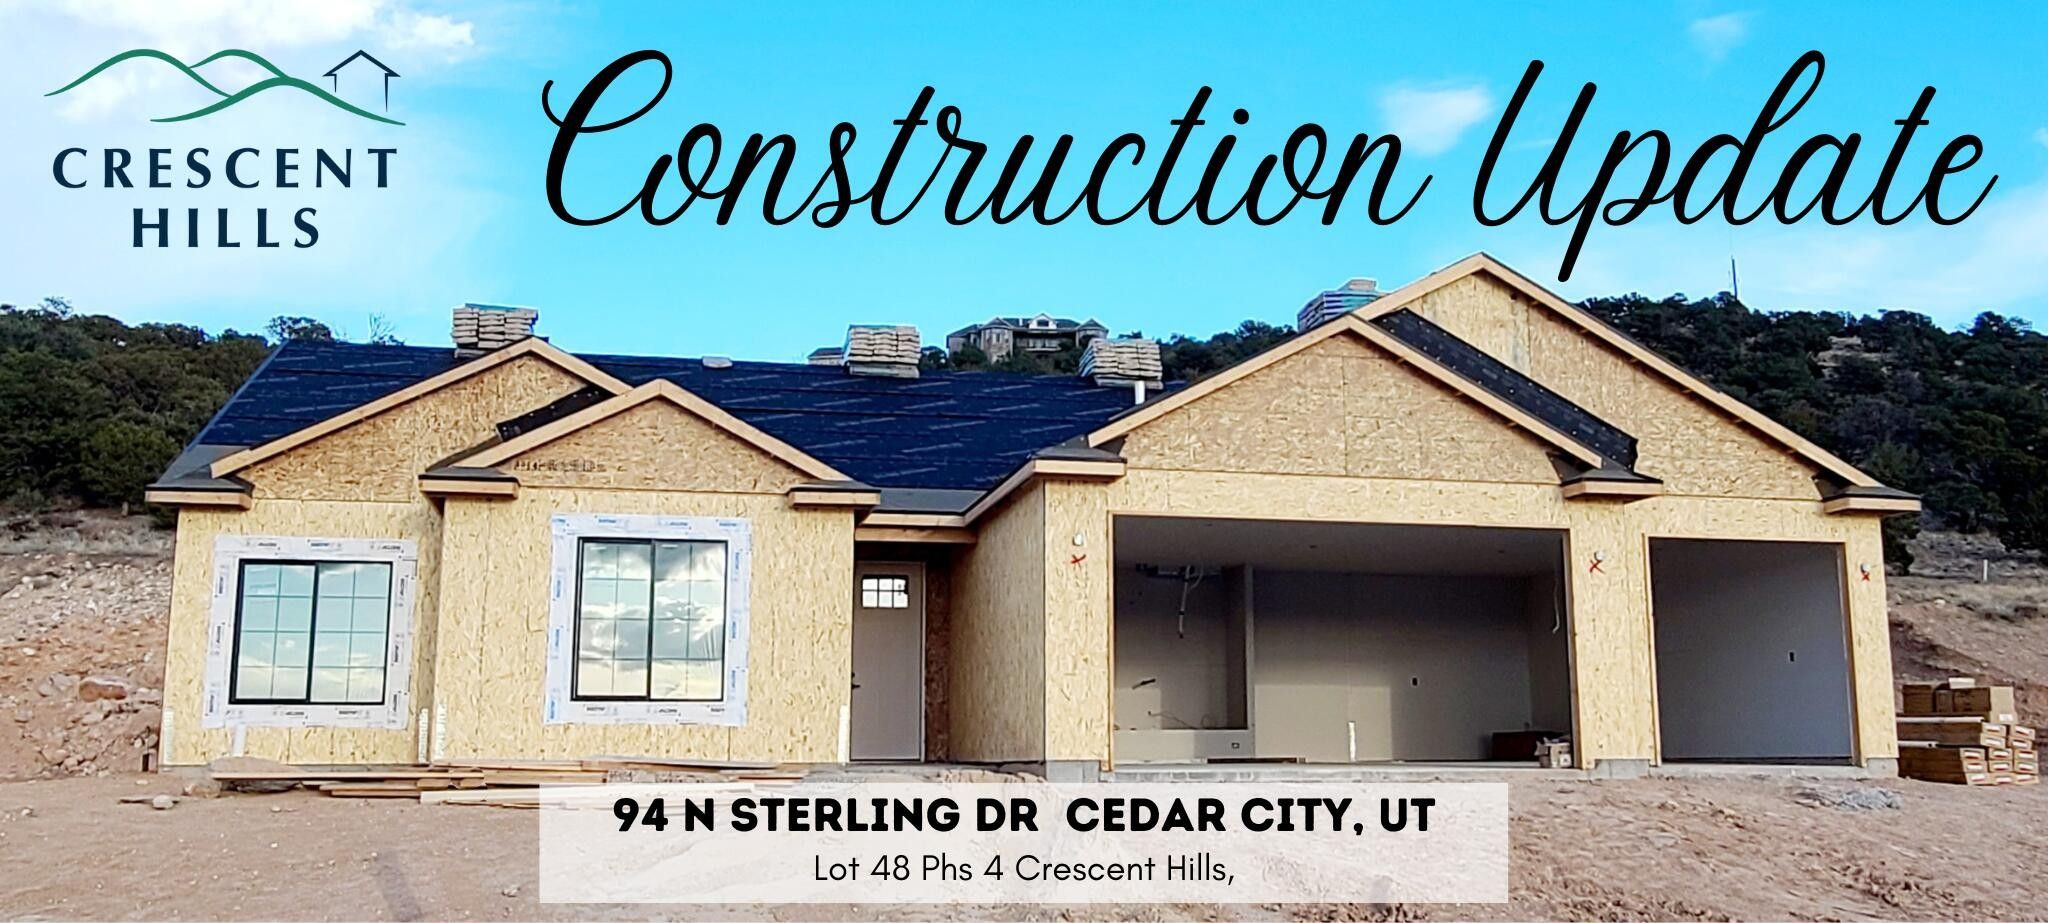 94 N Sterling Dr. Cedar City, UT 84720